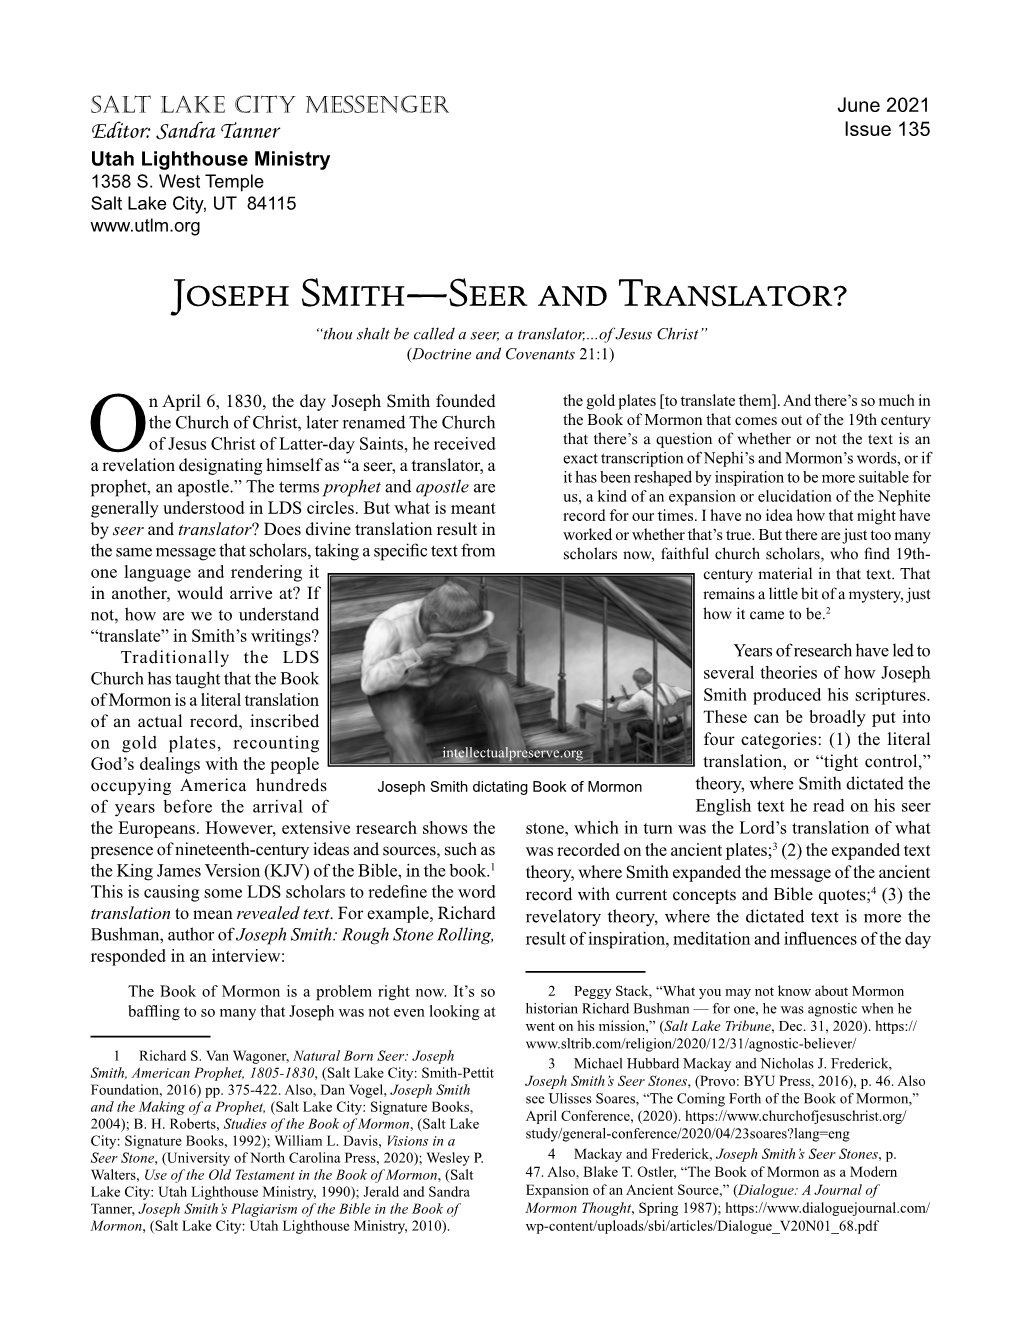 Joseph Smith —Seer and Translator?